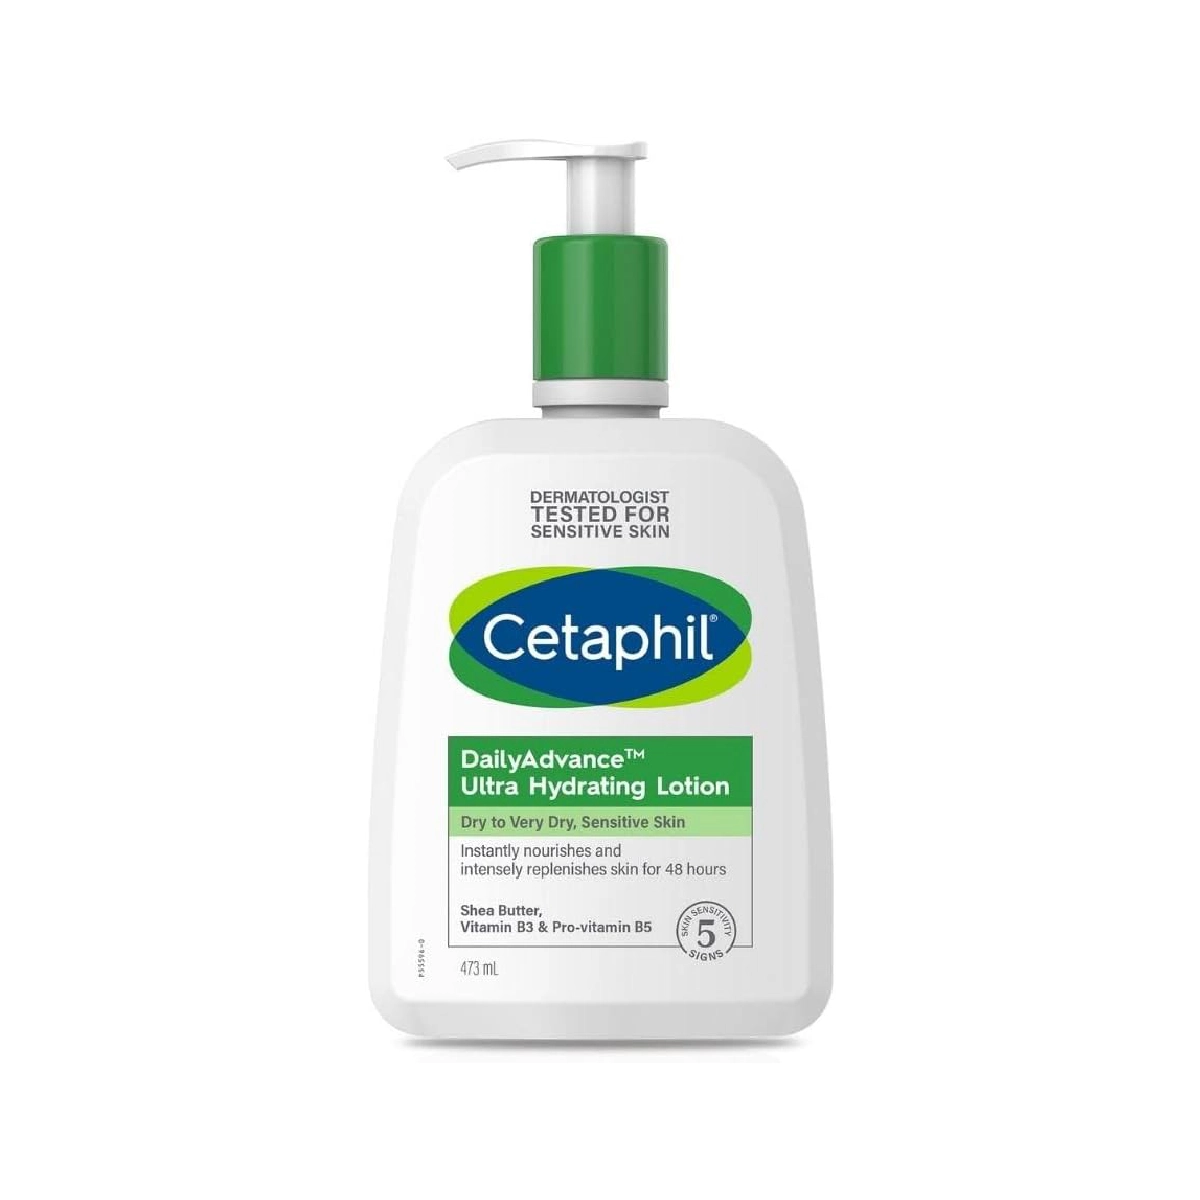 Cetaphil DailyAdvance Ultra Hydrating